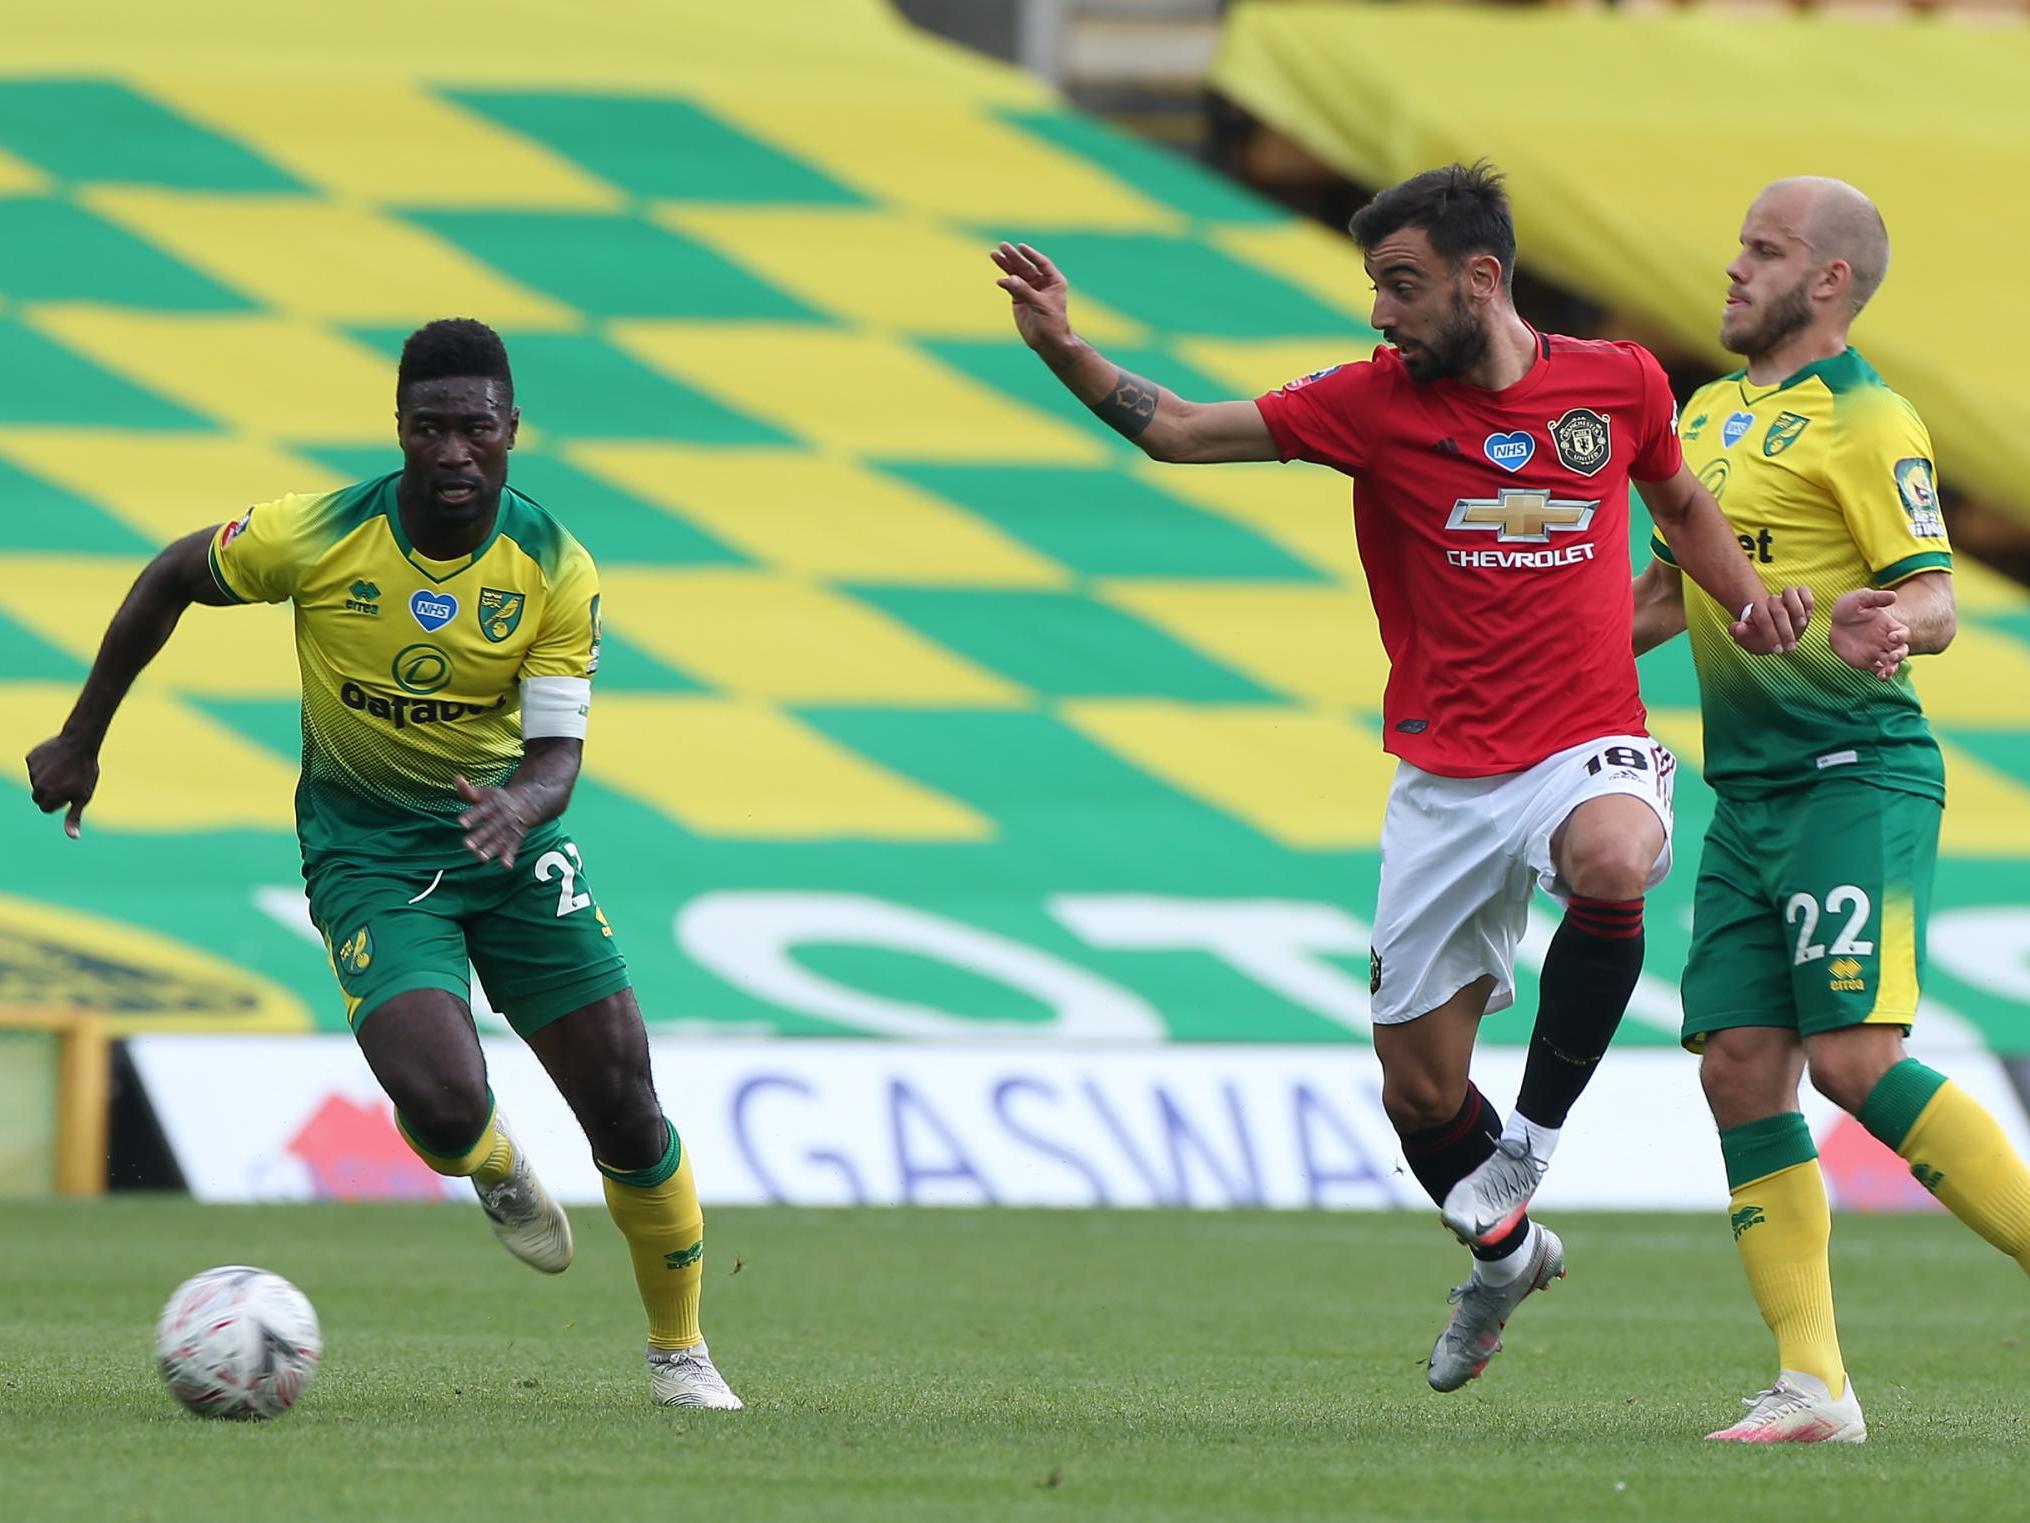 Fernandes controls the ball under pressure vs Norwich